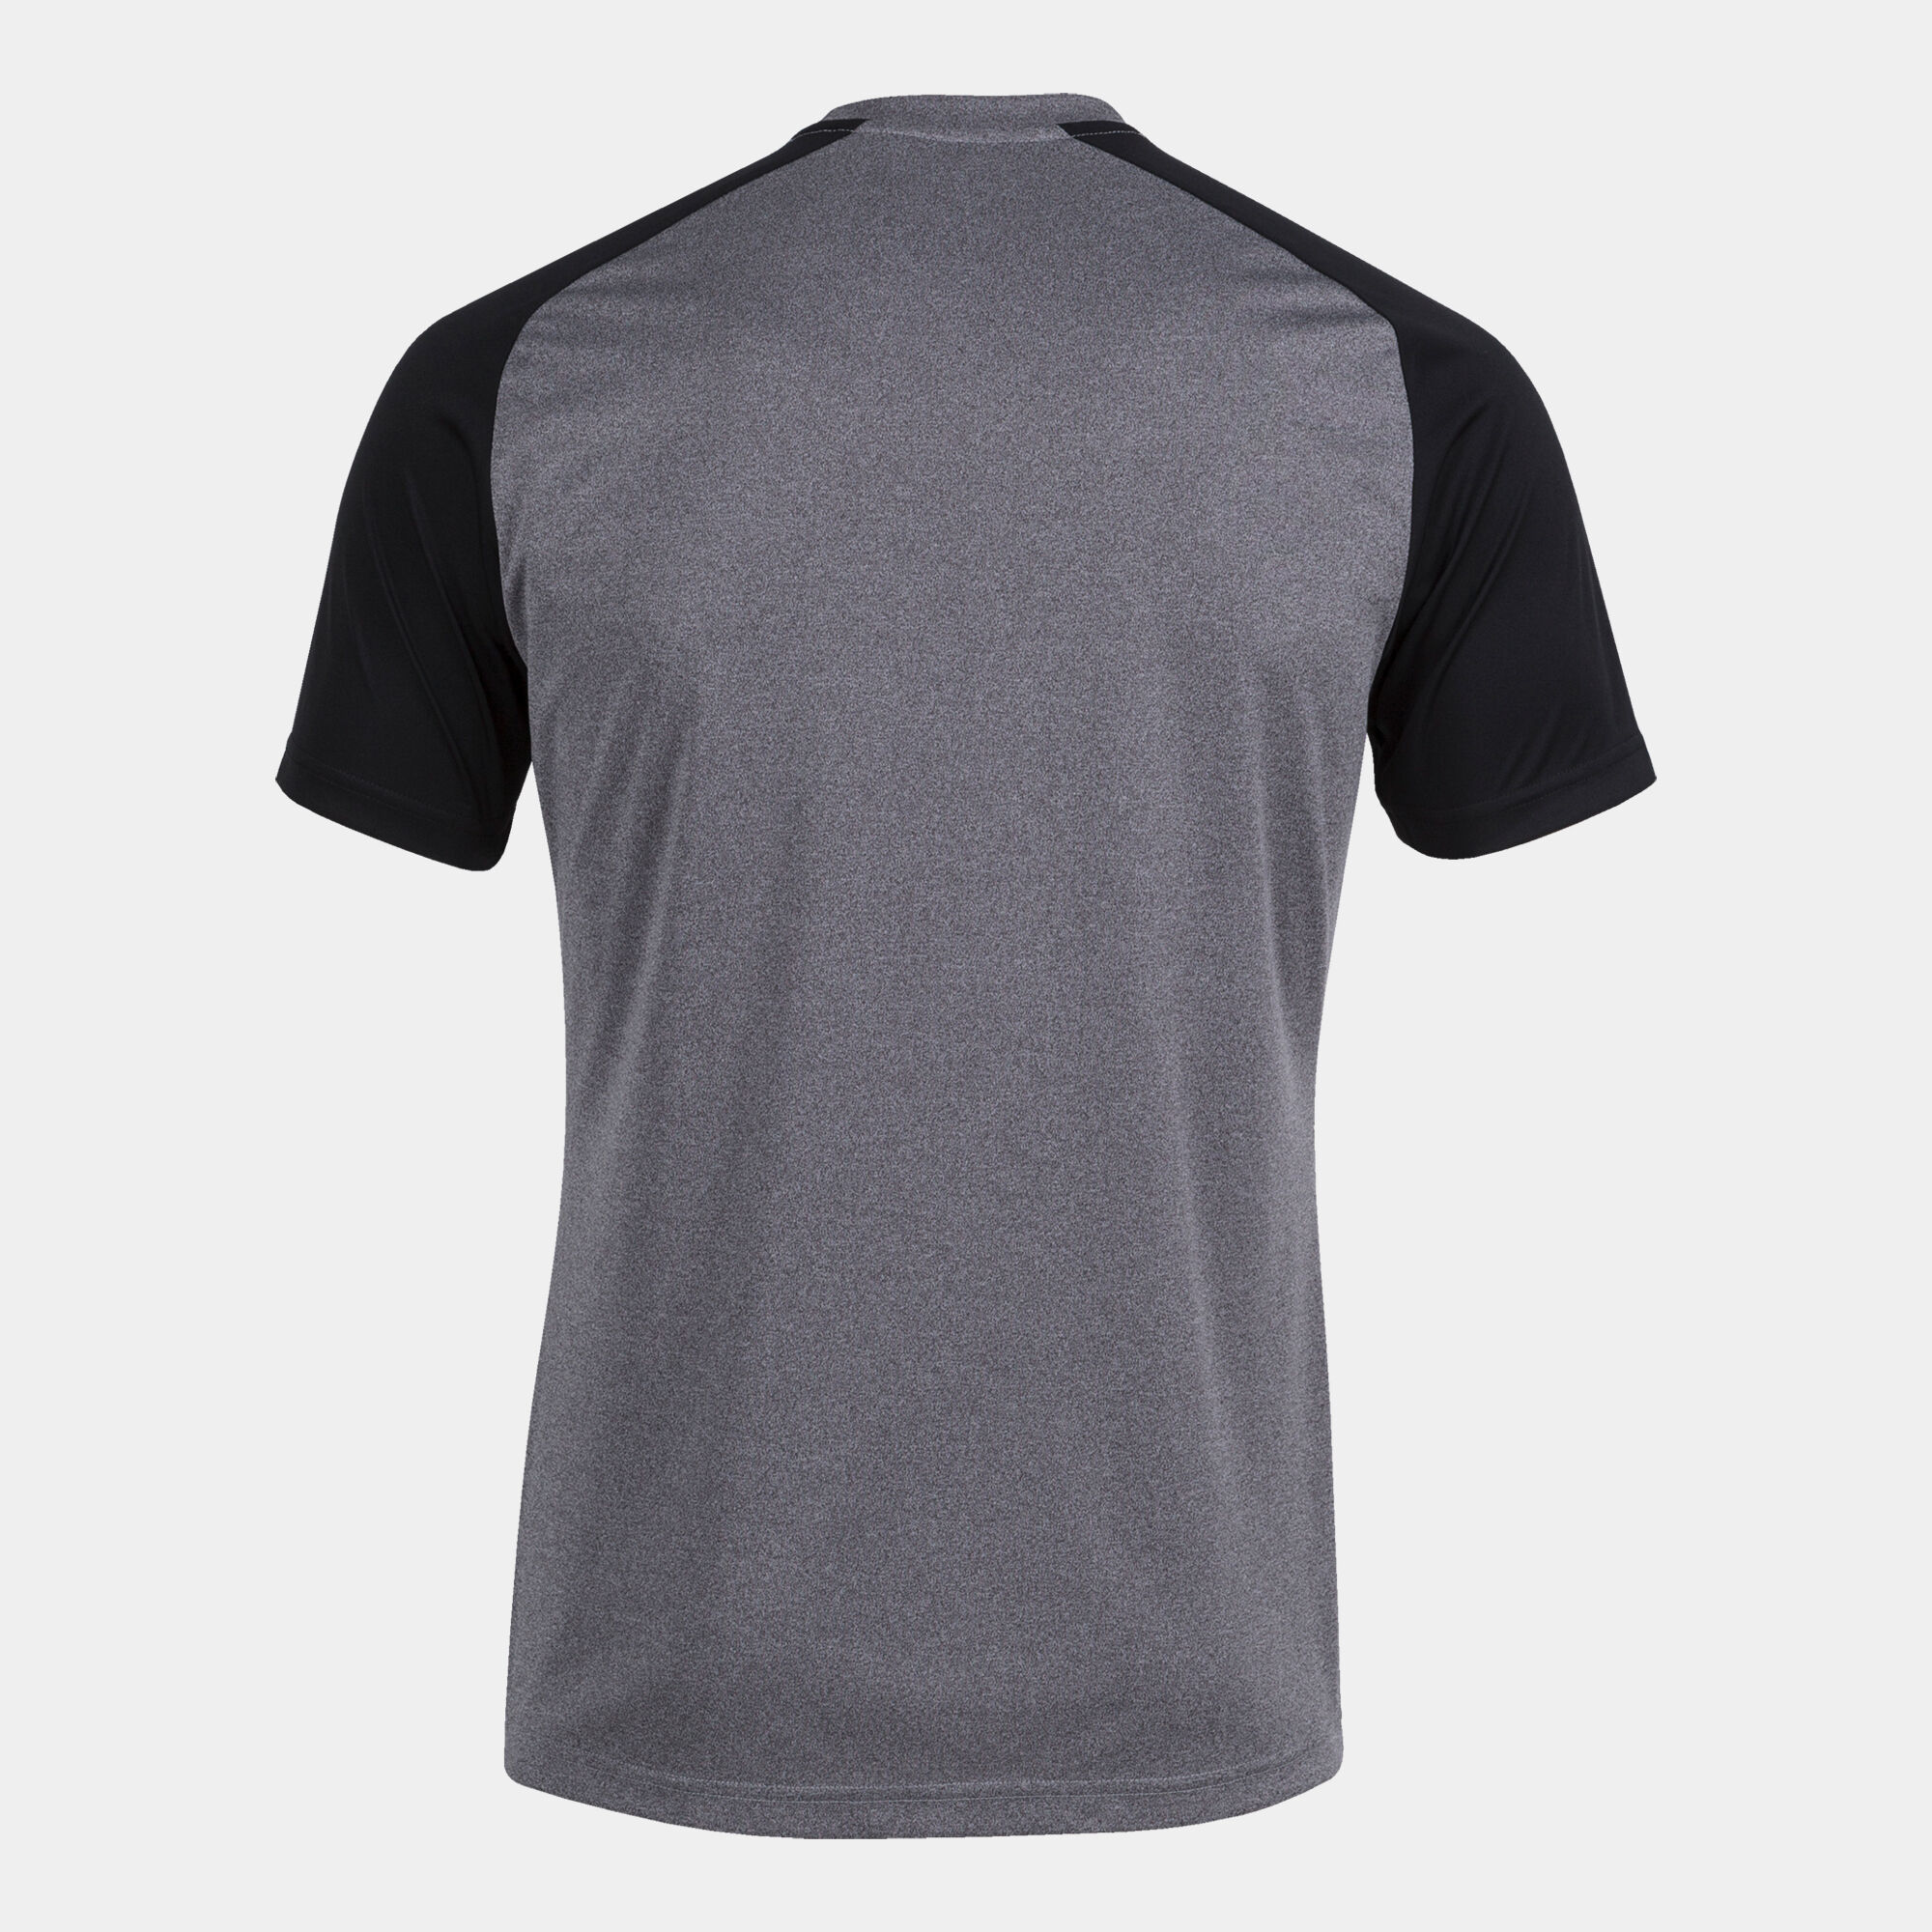 Camiseta manga corta hombre Academy IV gris melange negro